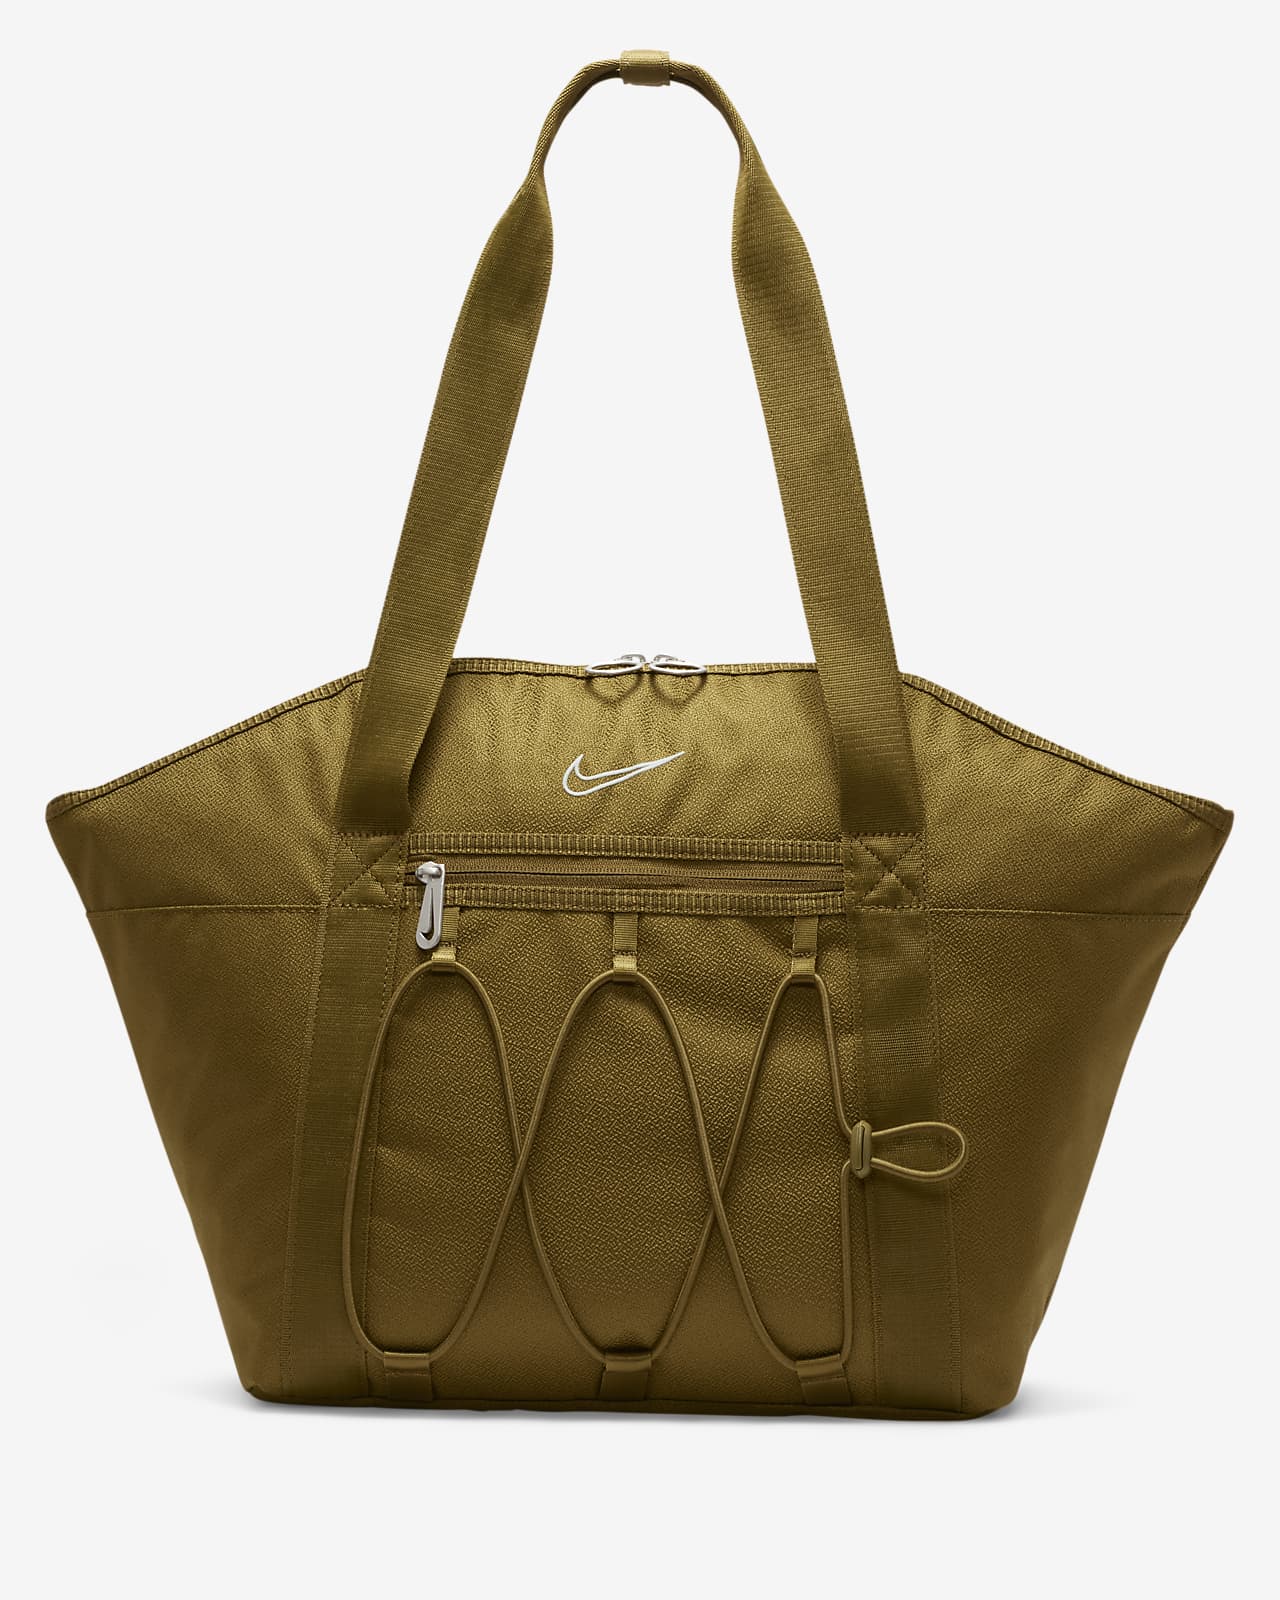 Nike - One - Training Tote Bag